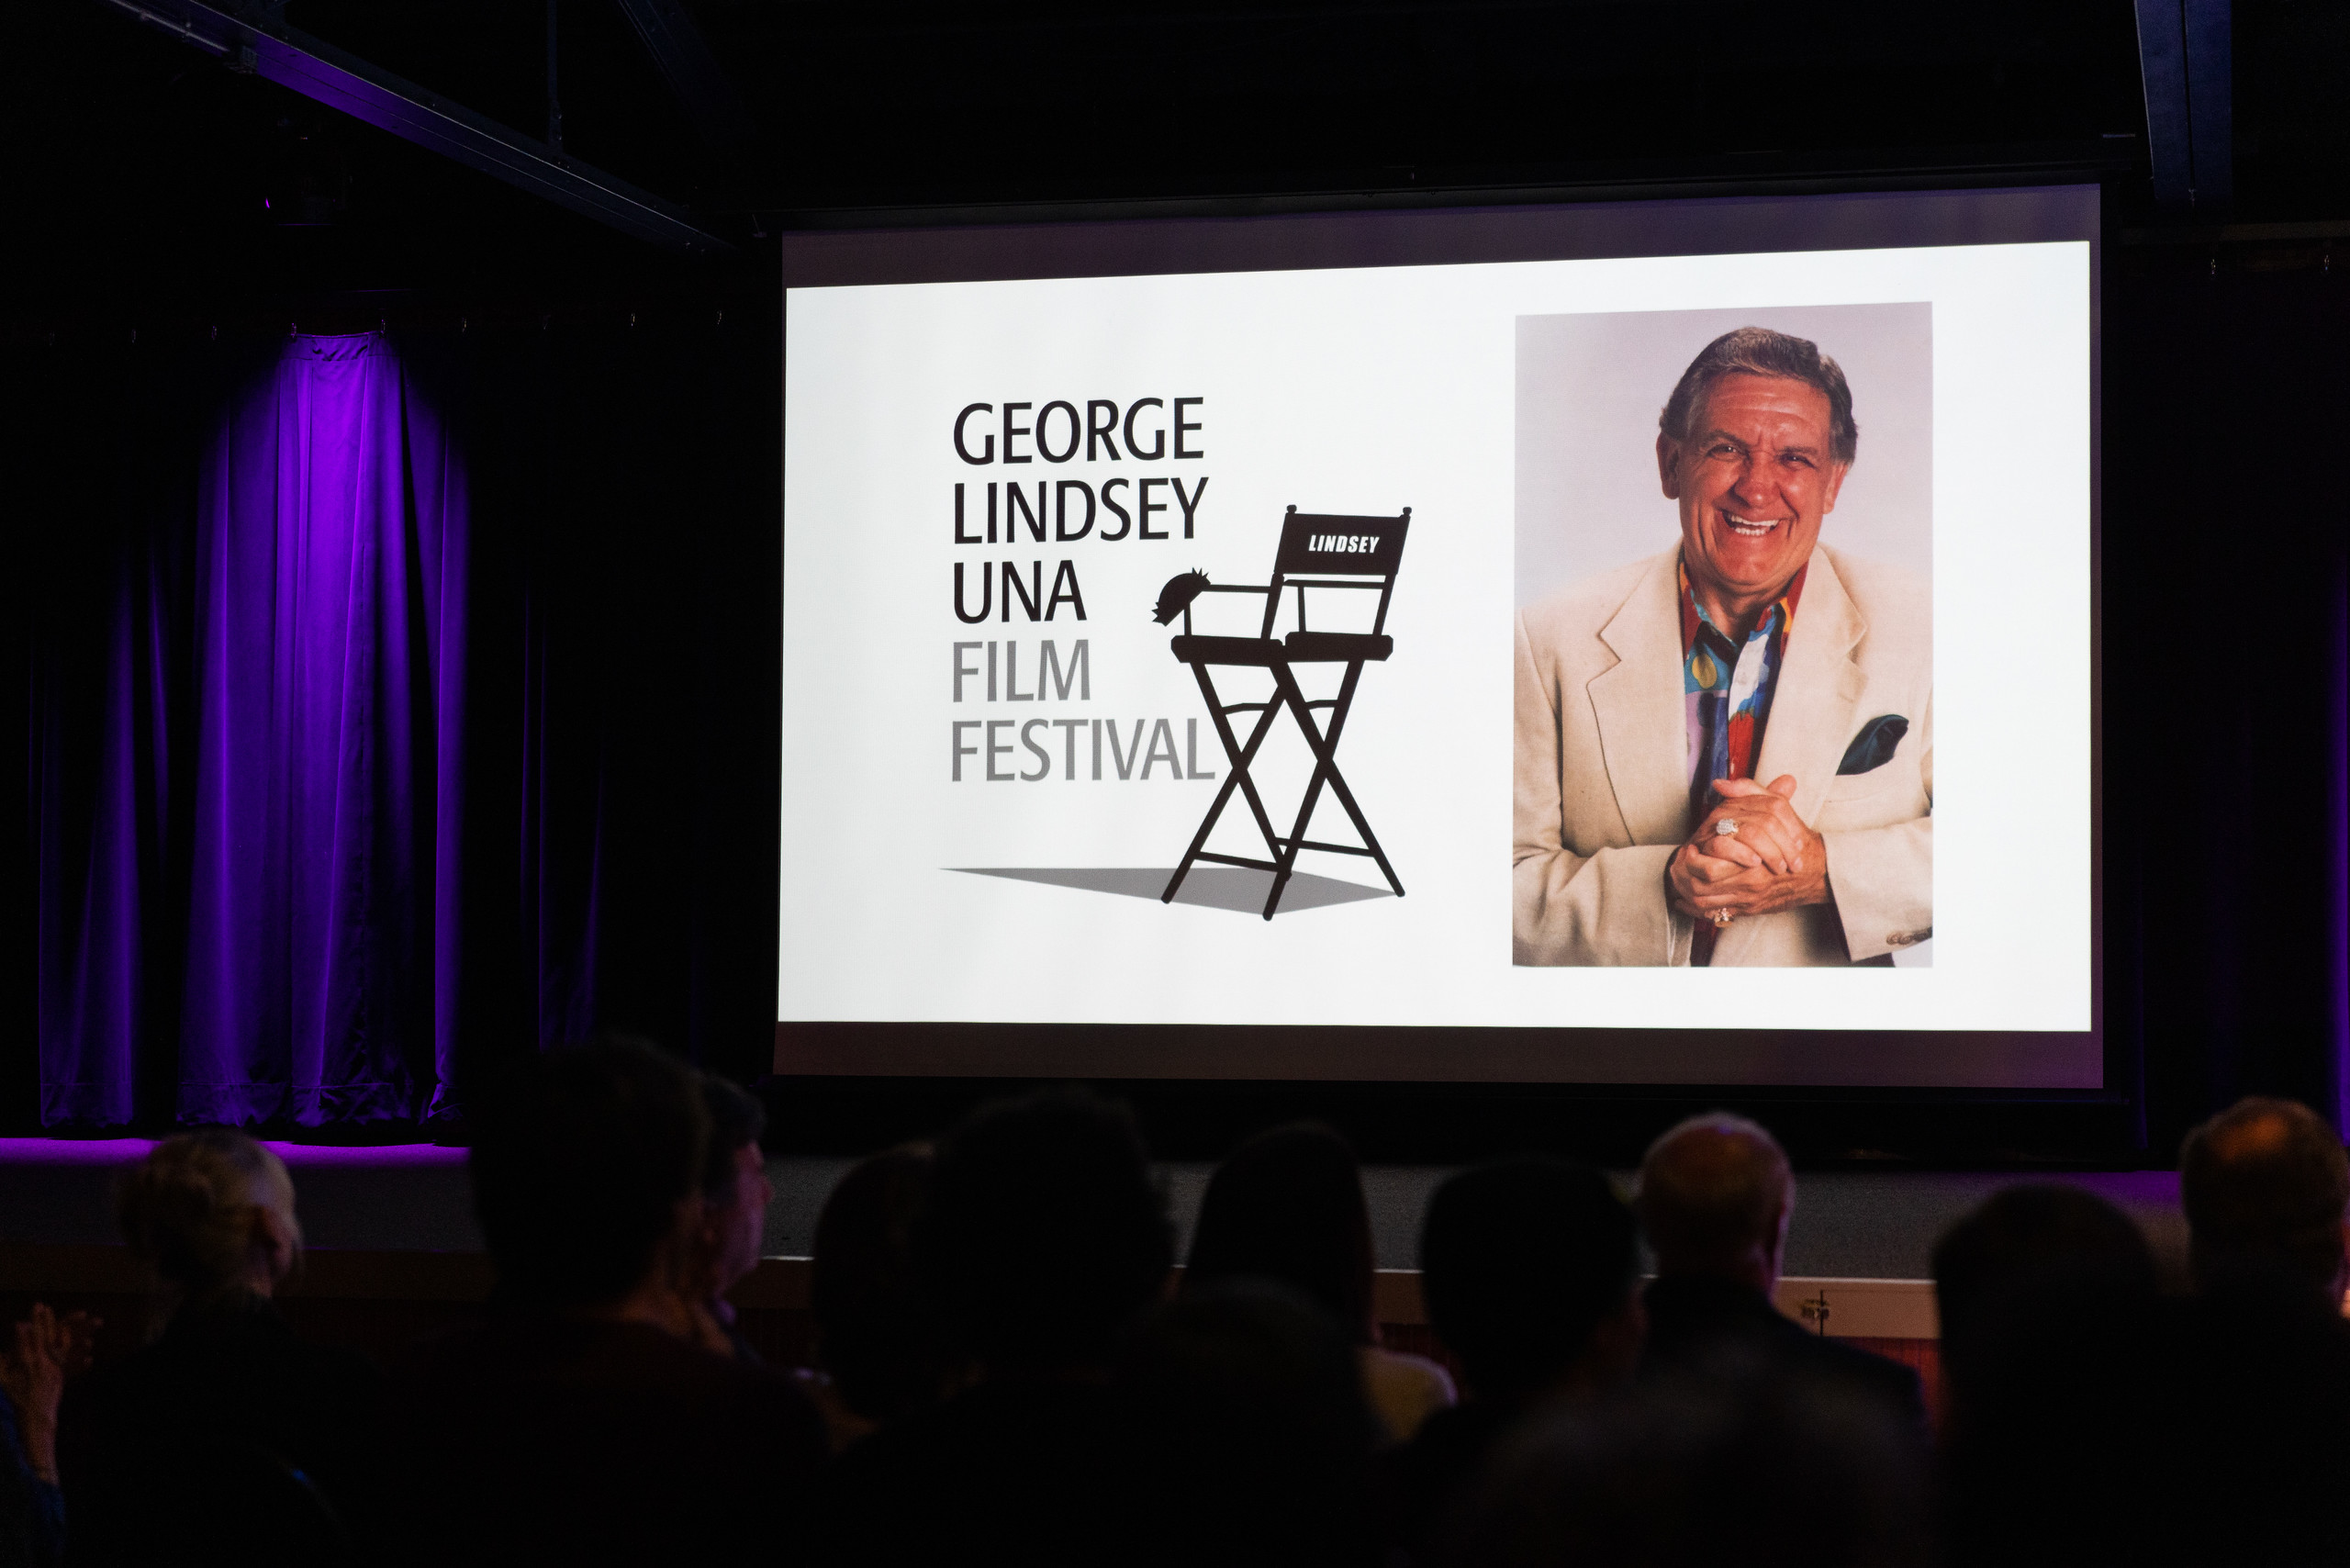 The George Lindsey UNA Film Festival kicks off Feb. 29.